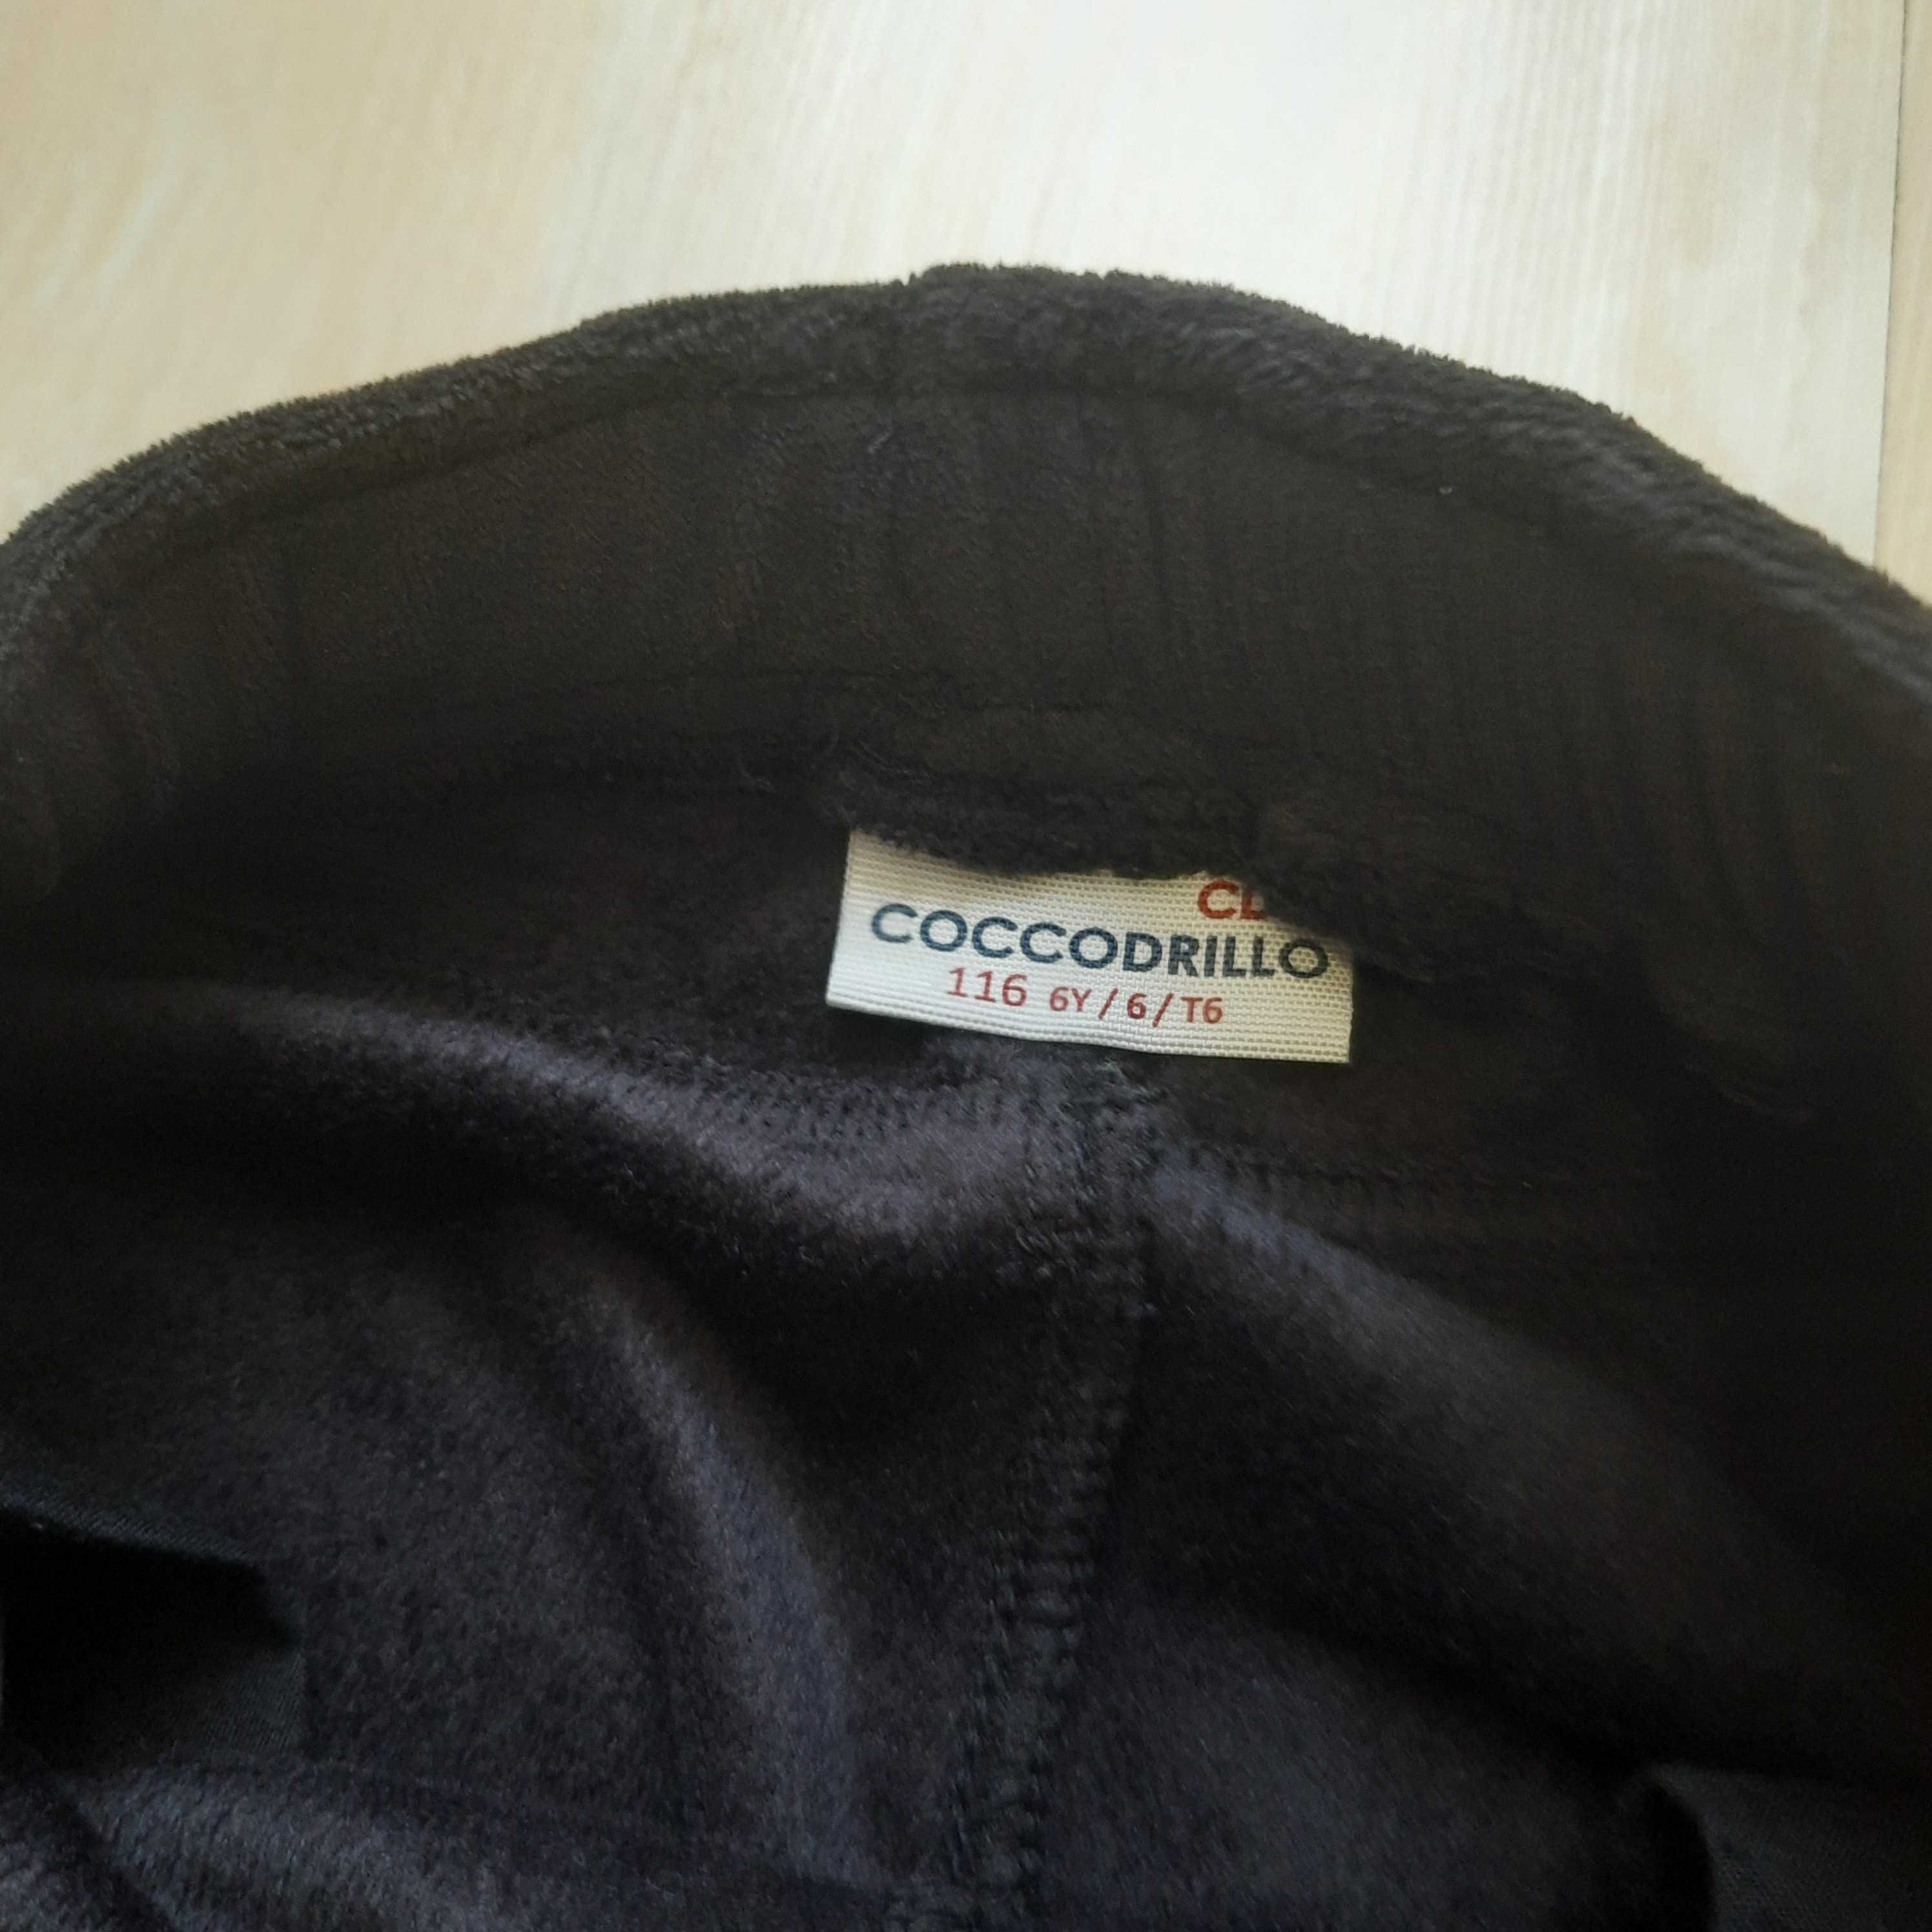 Spodnie aksamitne Coccodrillo rozmiar 116, sran bardzo dobry.